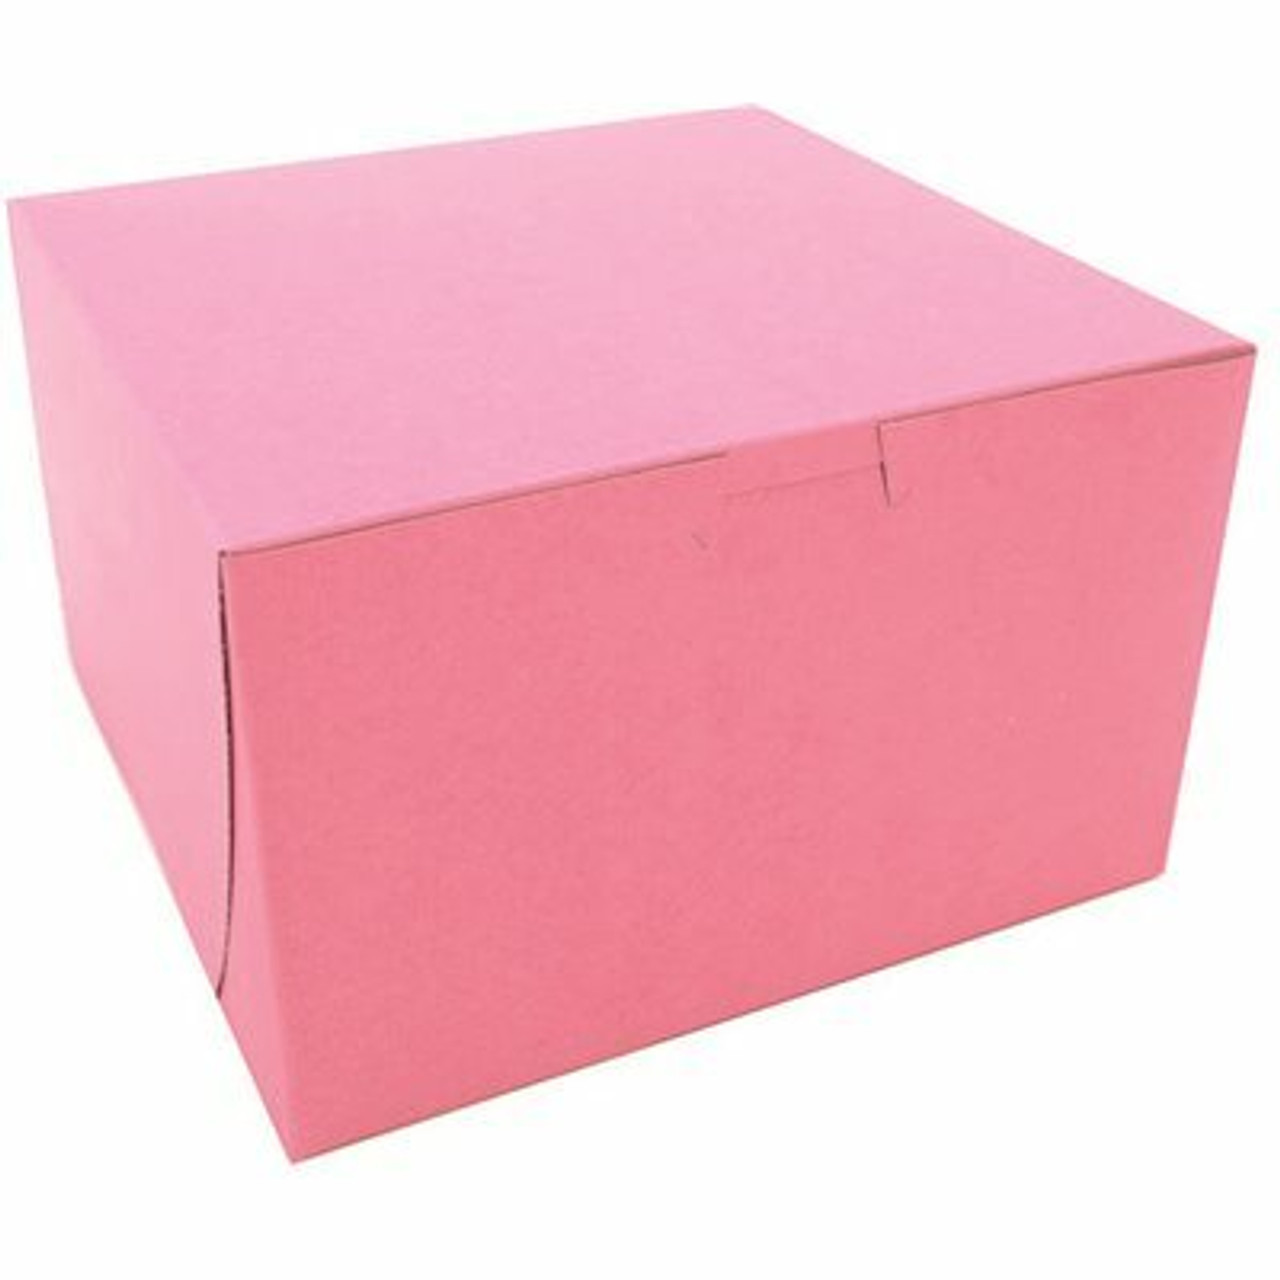 Southern Champion Tray Pink Non-Window Bakery Box 8 X 8 X 5" (100 Per Case)